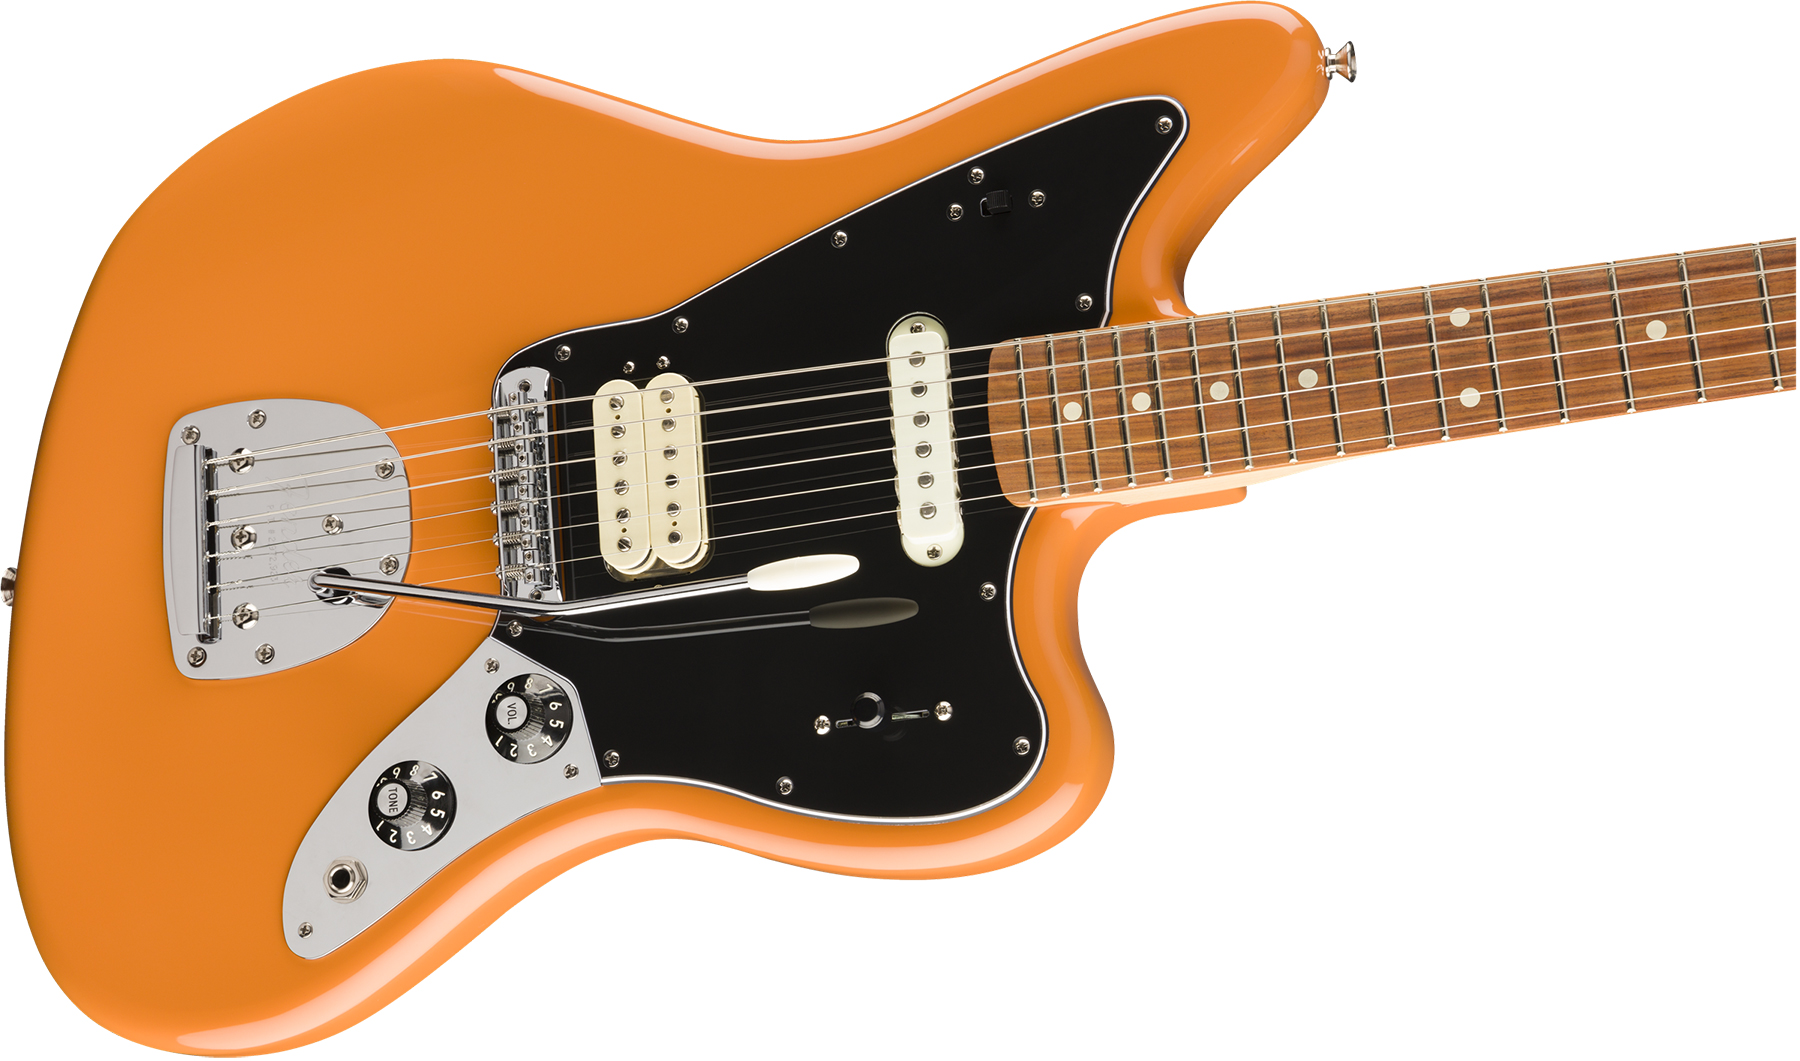 Fender Jaguar Player Mex Hs Pf - Capri Orange - Retro rock electric guitar - Variation 2